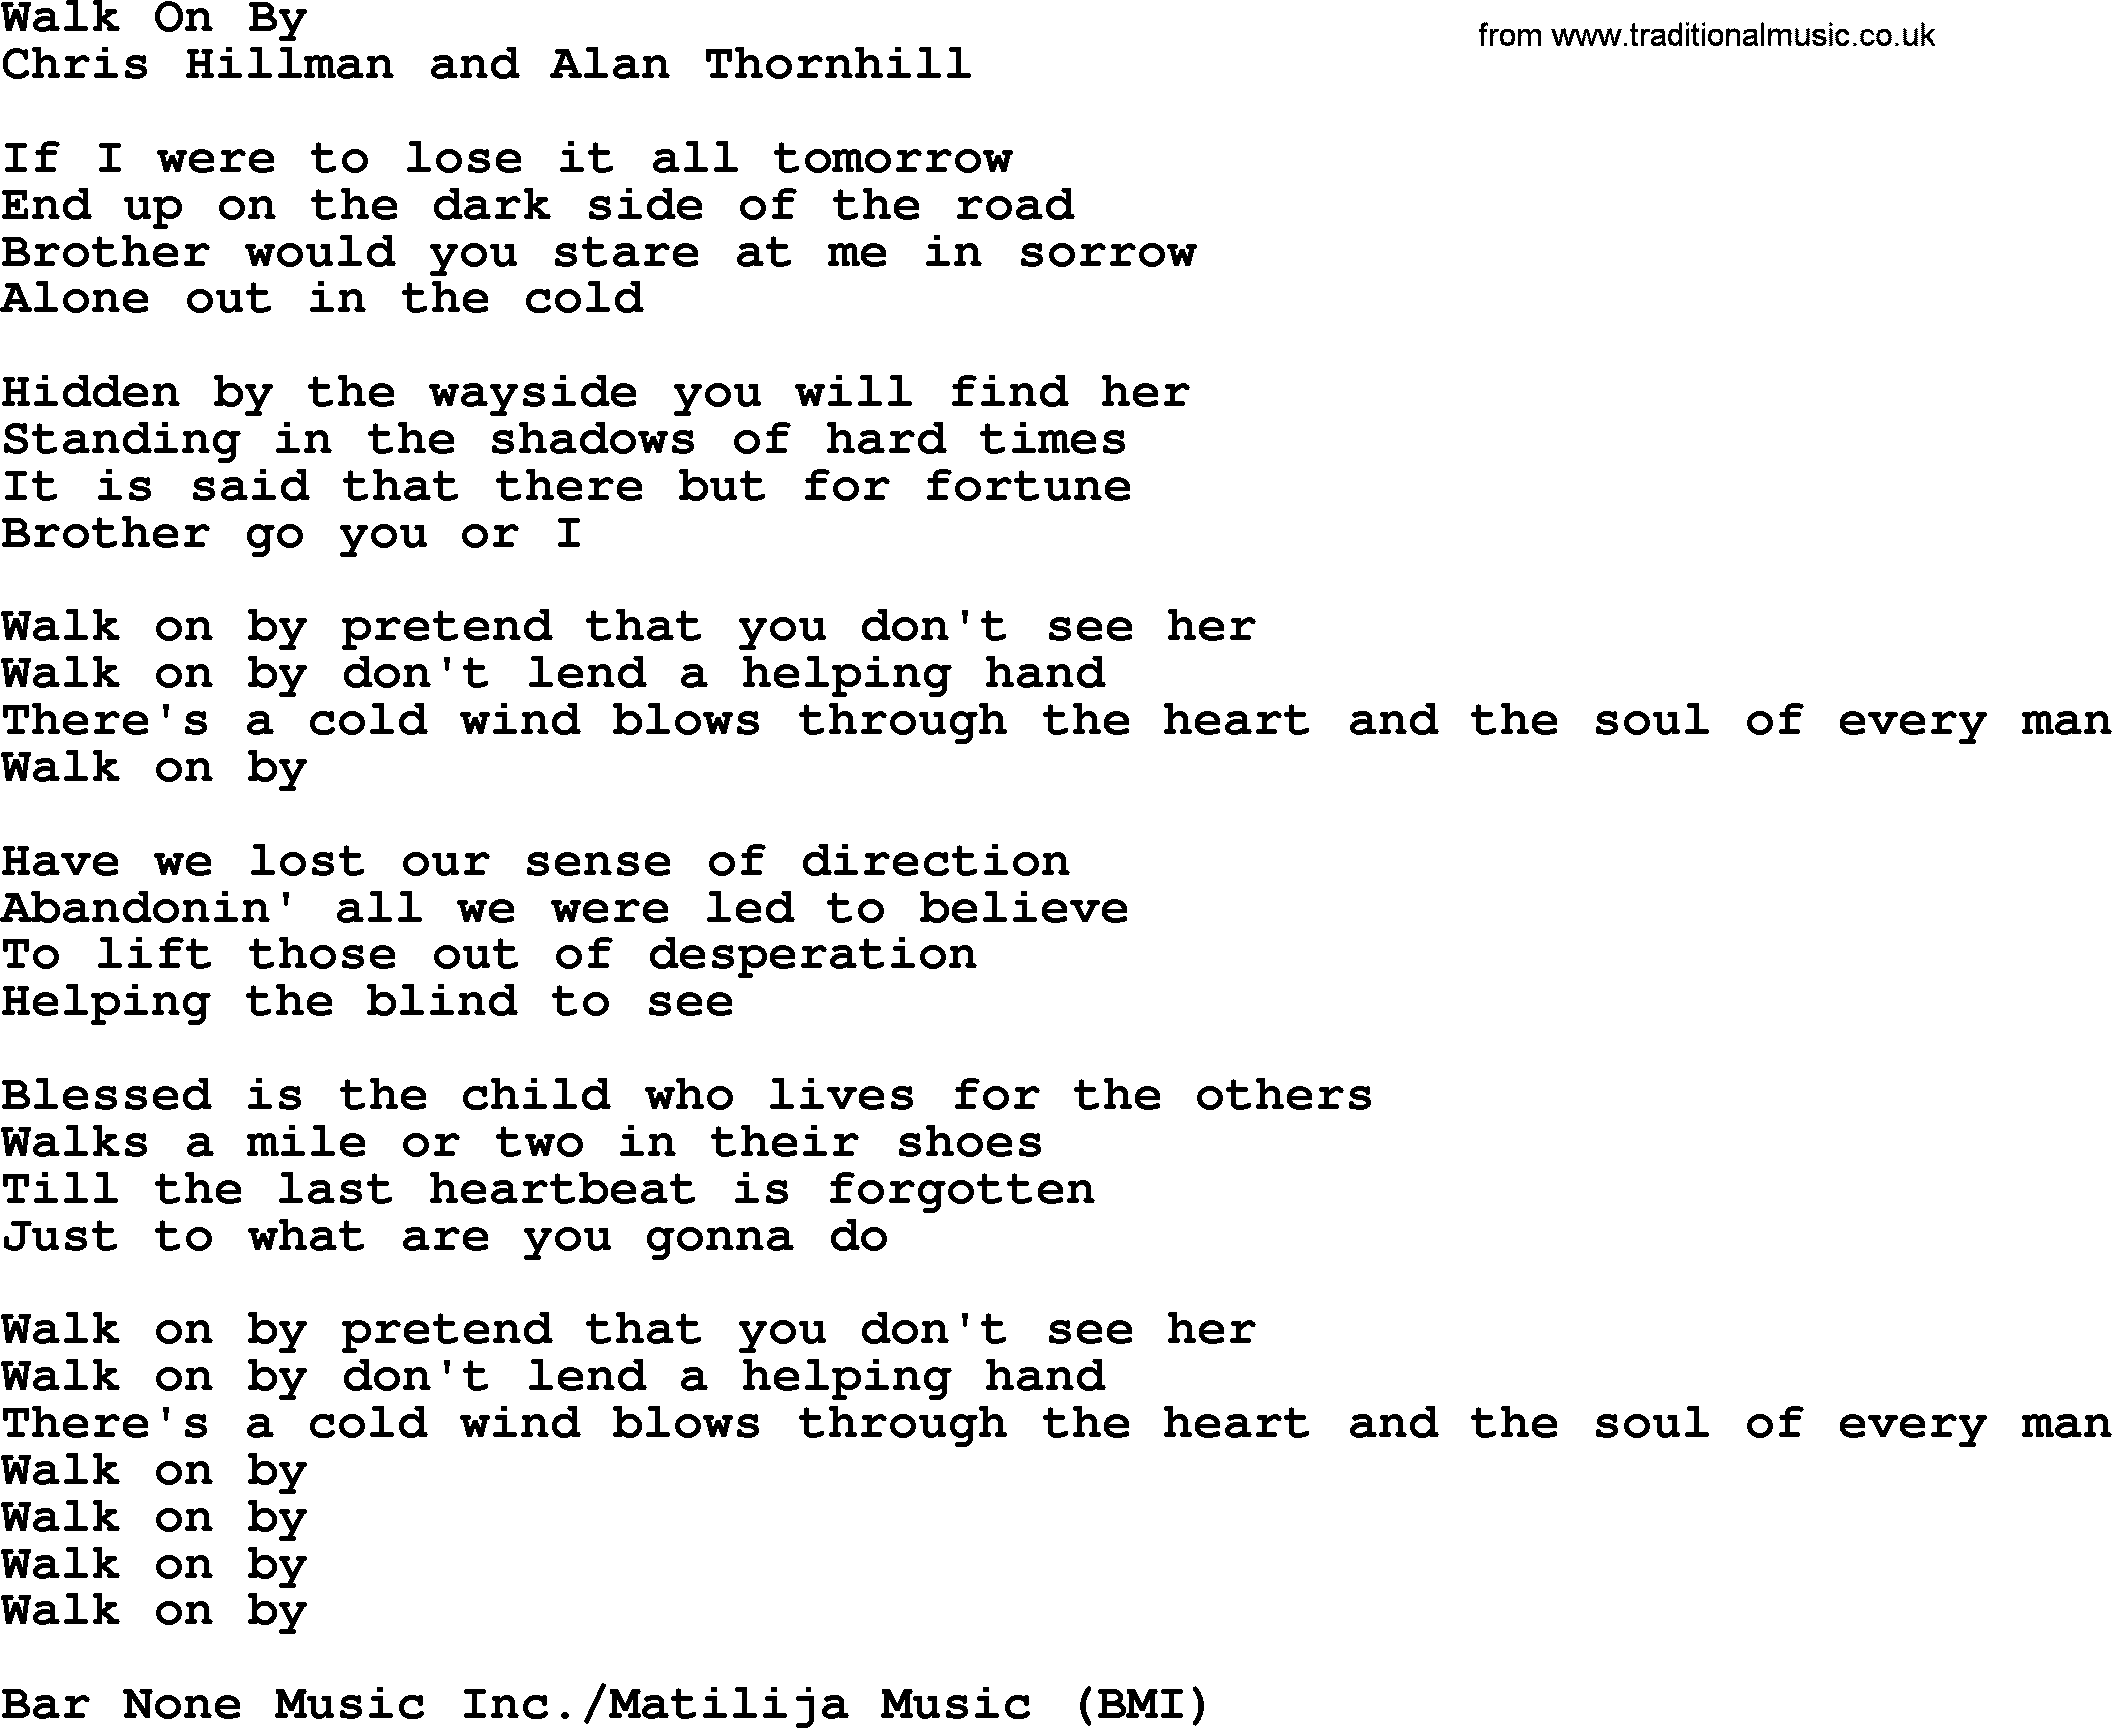 The Byrds song Walk On By, lyrics